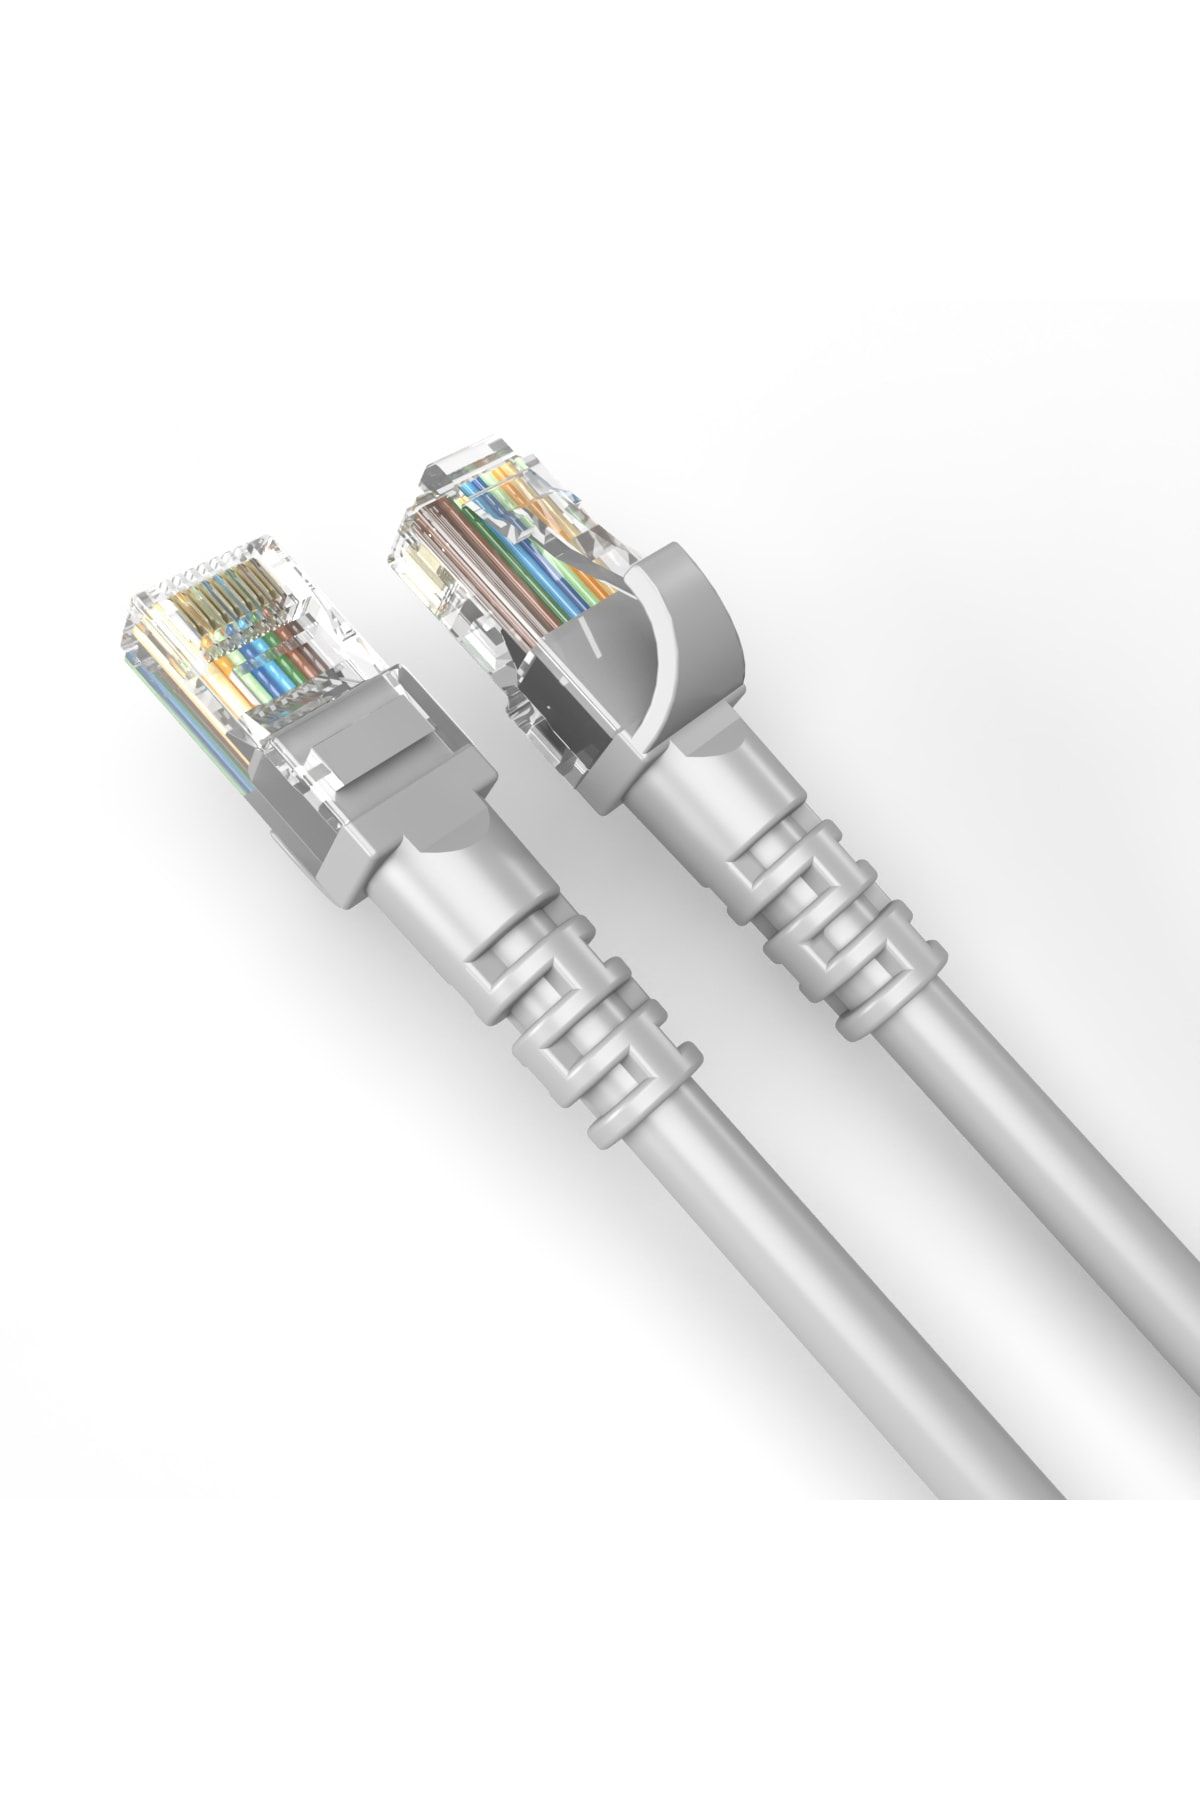 DERKAB 5 Metre Cat6 Network-Ağ-Ethernet Kablosu Gri